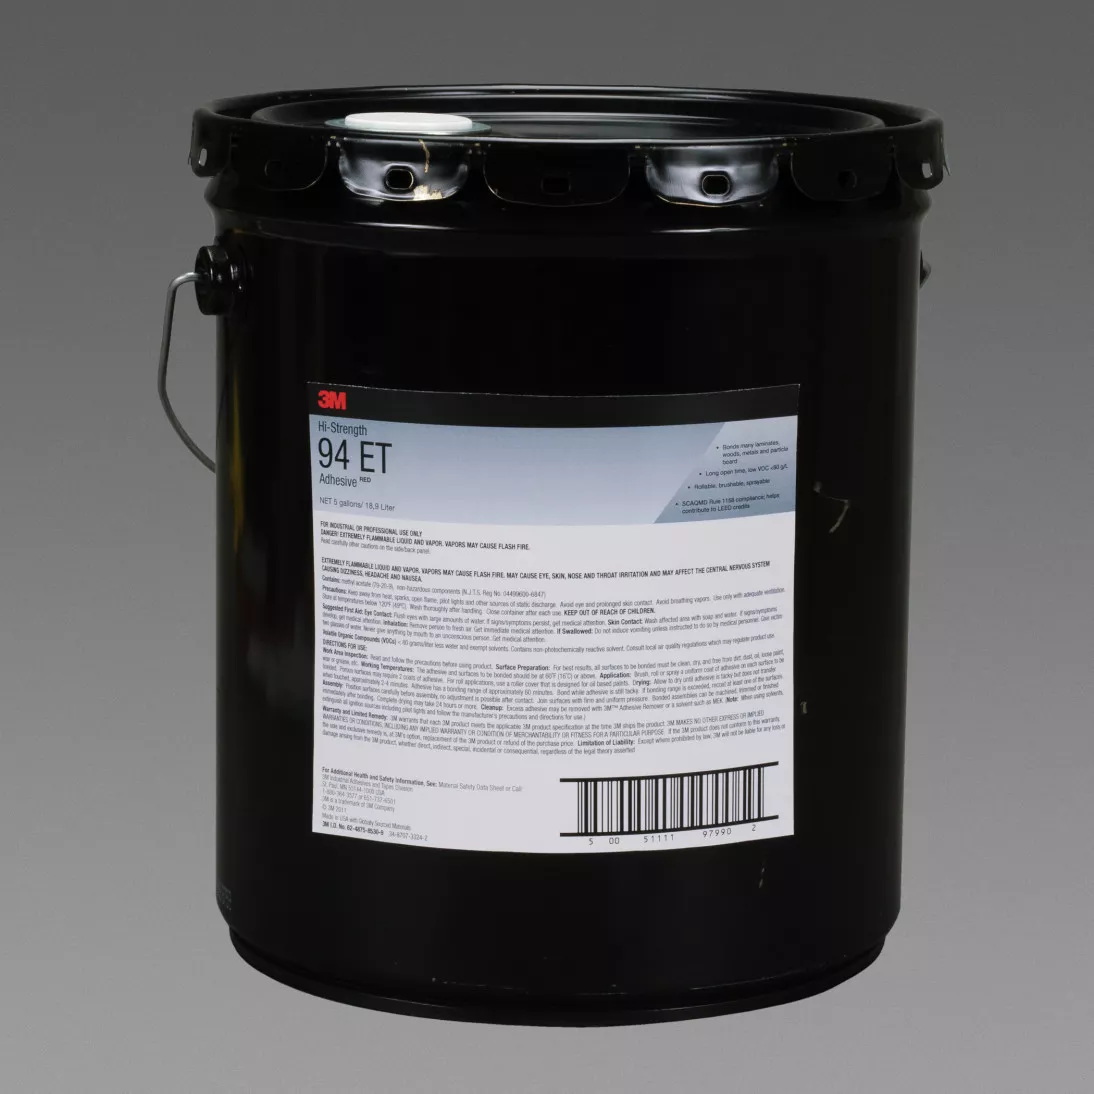 3M™ Hi-Strength 94 ET Adhesive, Red, 5 Gallon Drum (Pail)